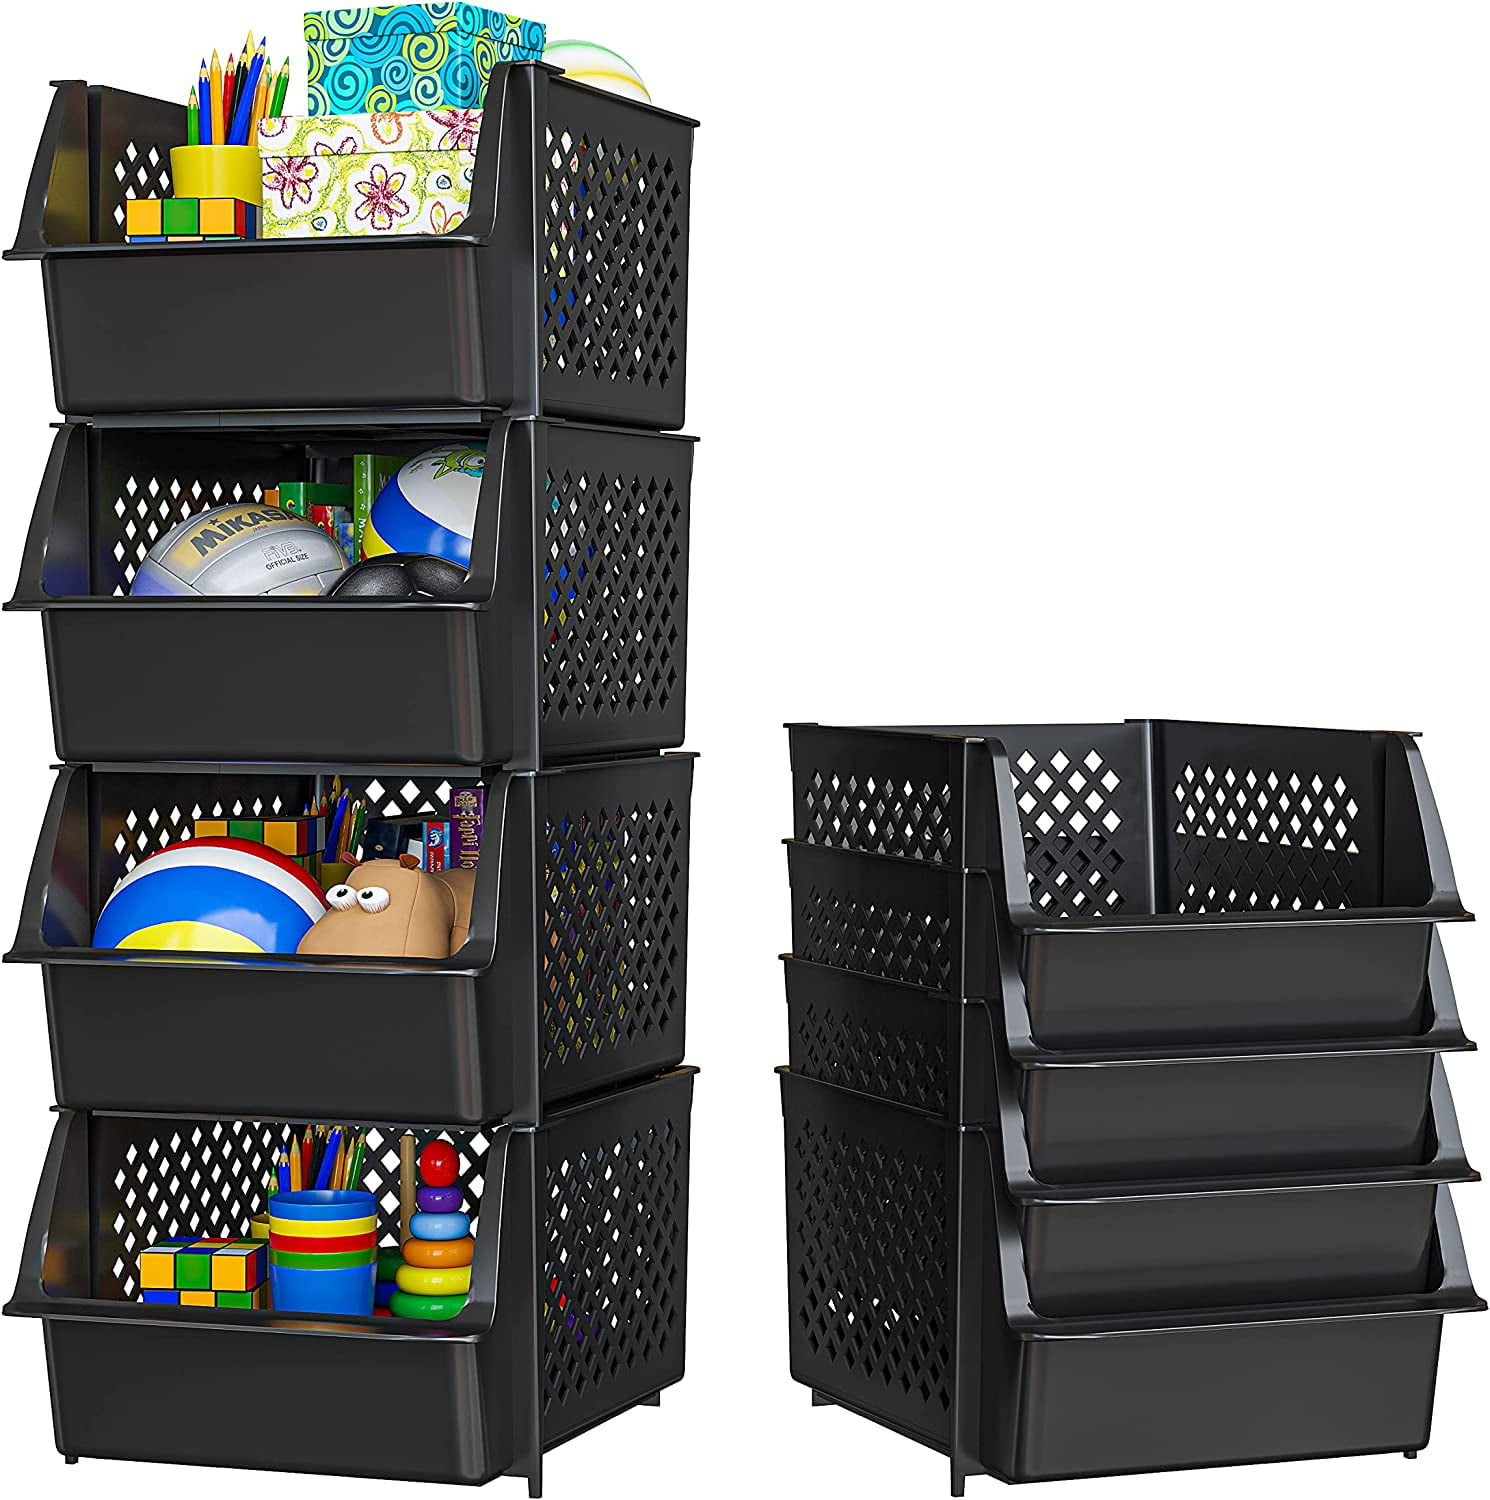 EOENVIVS Set of 6 Plastic Storage Bins Pantry Organization and Storage  Containers Storage Baskets Shelf Organizer Bins for Shelves Drawers Desktop